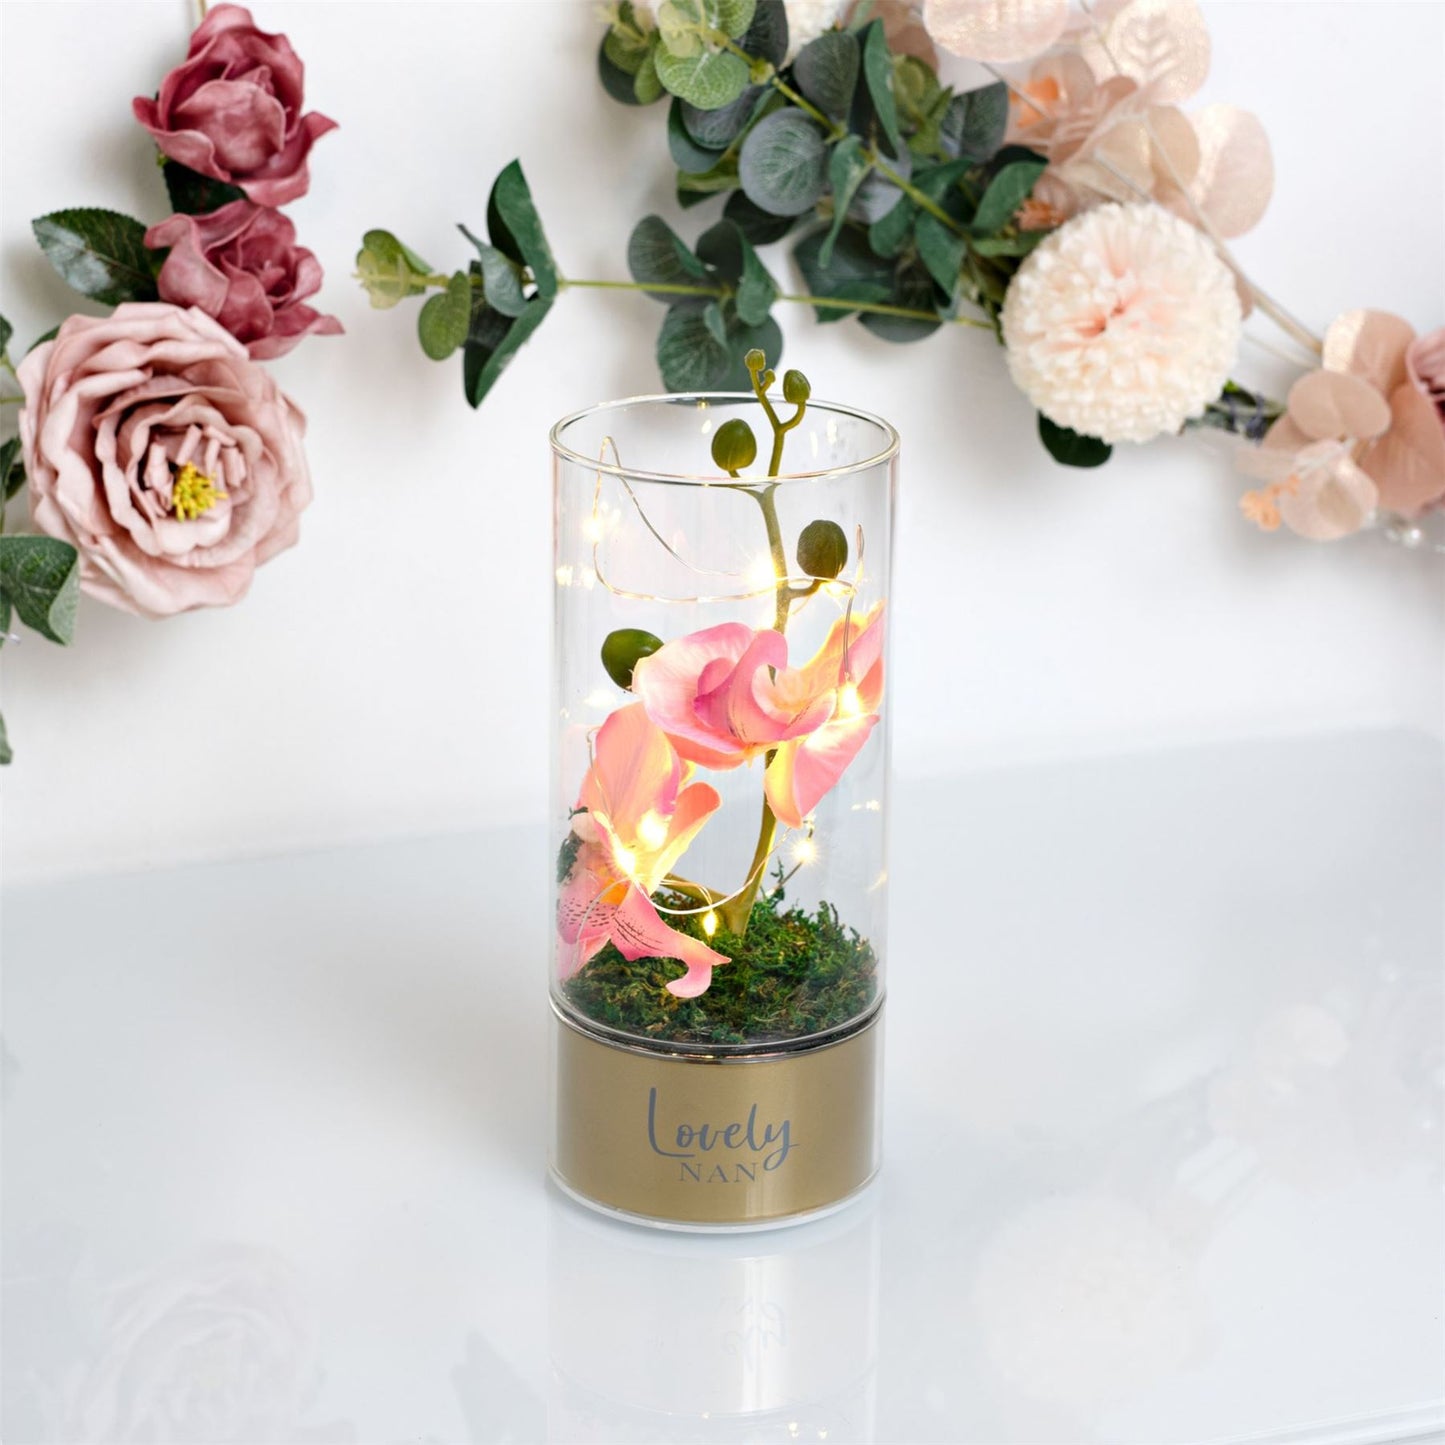 Peaches & Cream Tube Orchid Flowers & LED Light - Nan